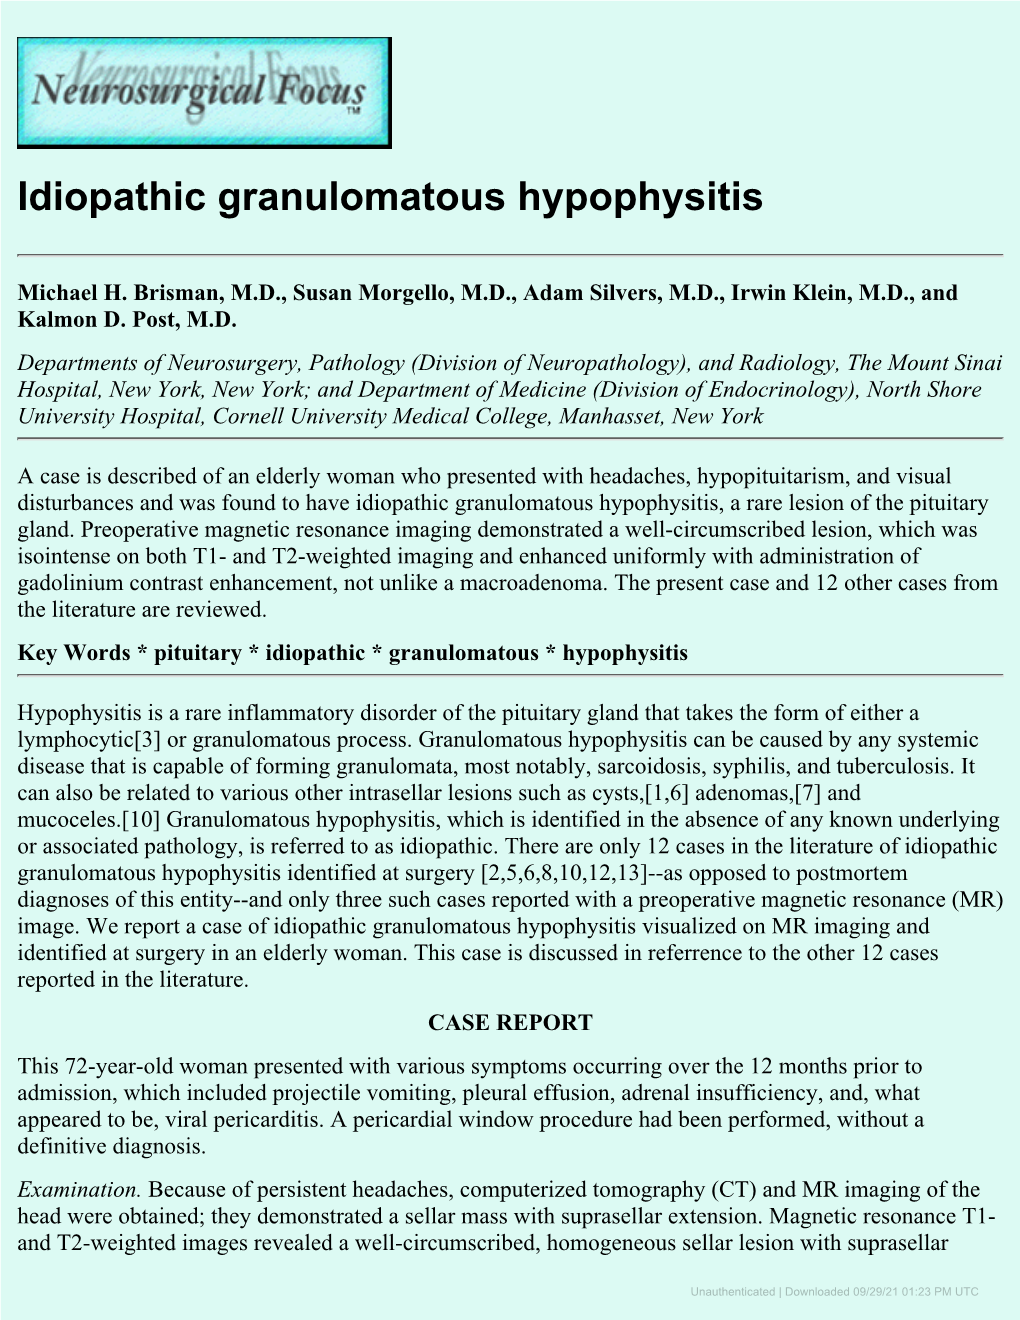 Idiopathic Granulomatous Hypophysitis